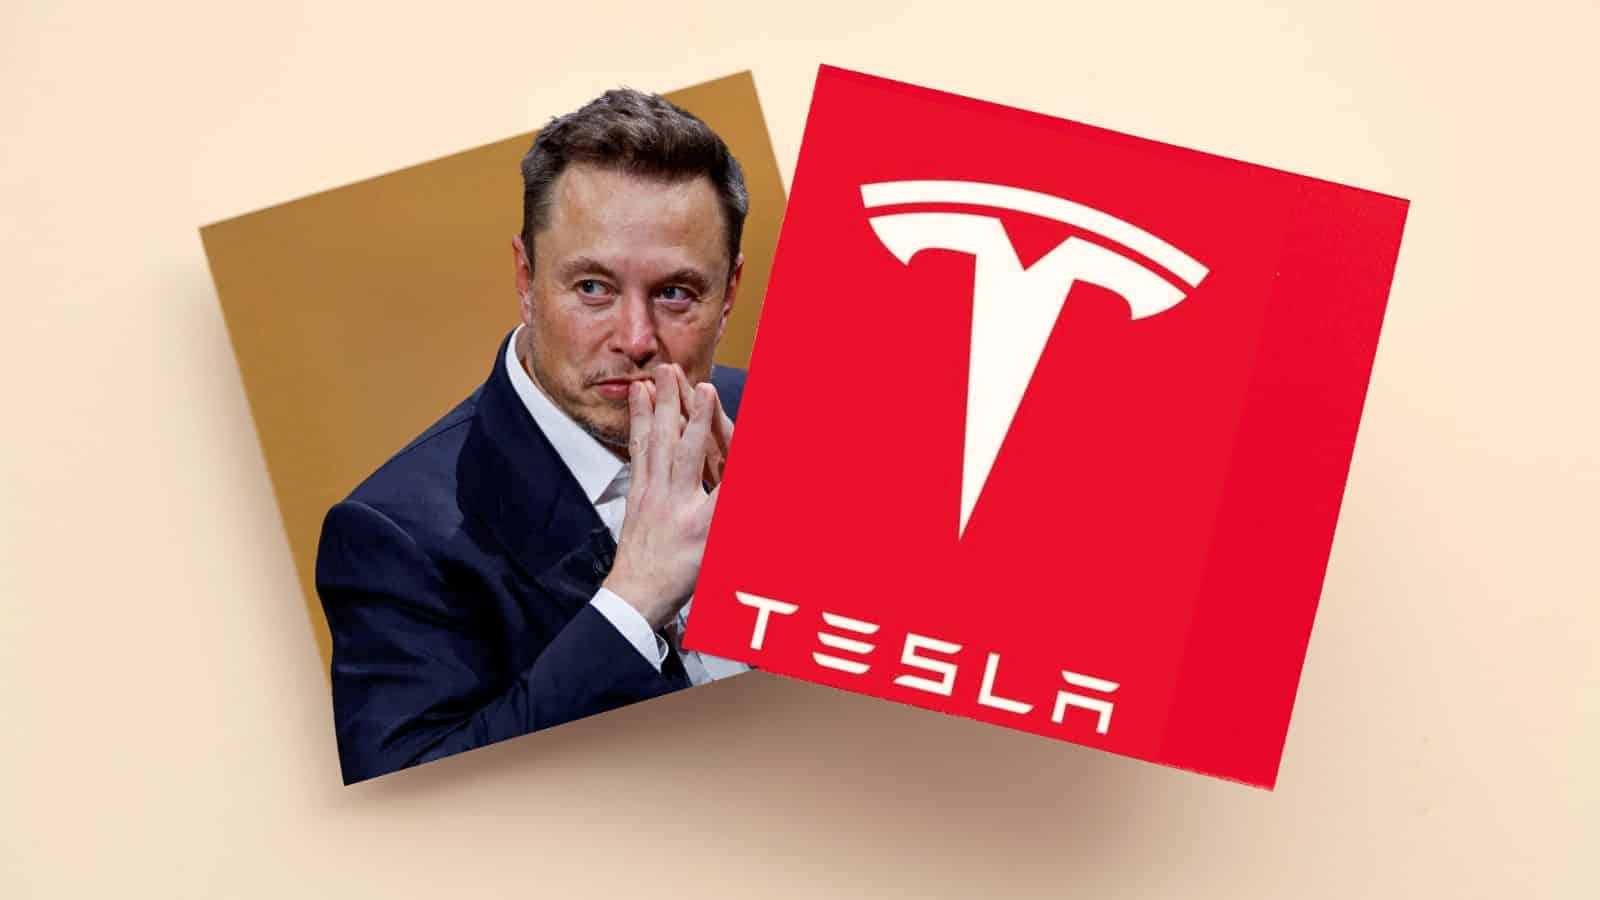 Elon Musk e Tesla: la guida autonoma è sempre 